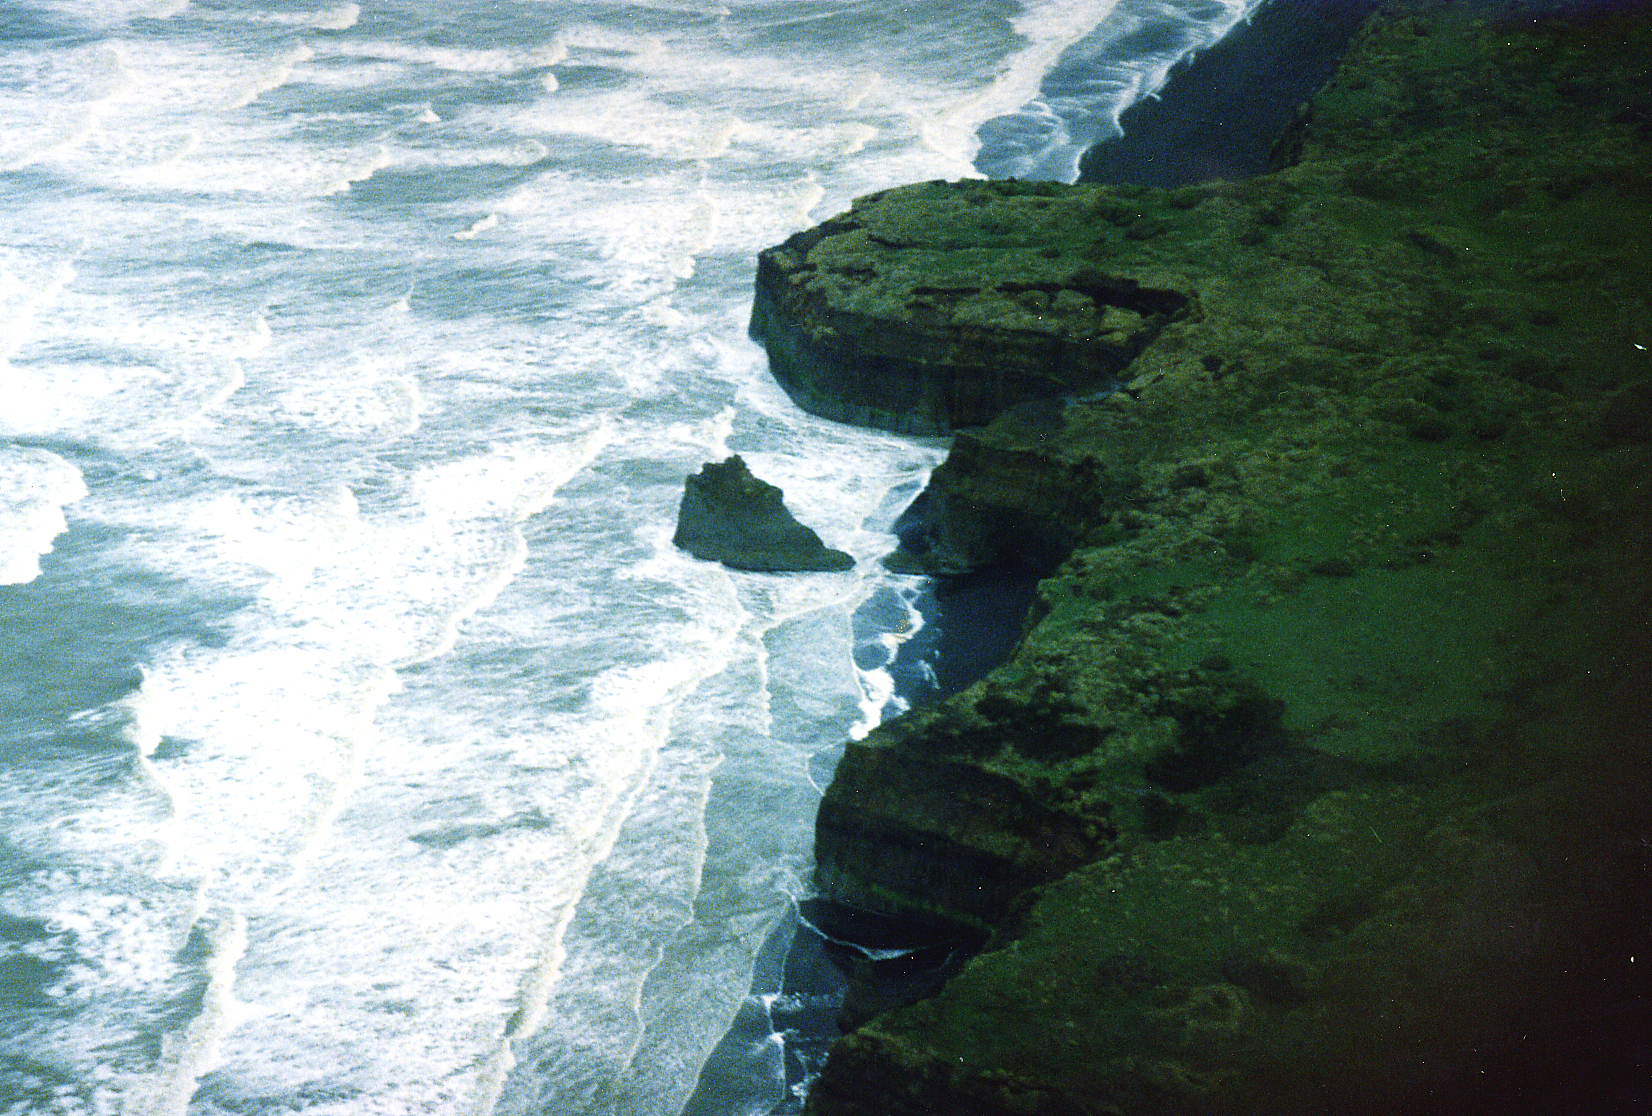 Taranaki coast near Patea - Flickr - PhillipC.jpg